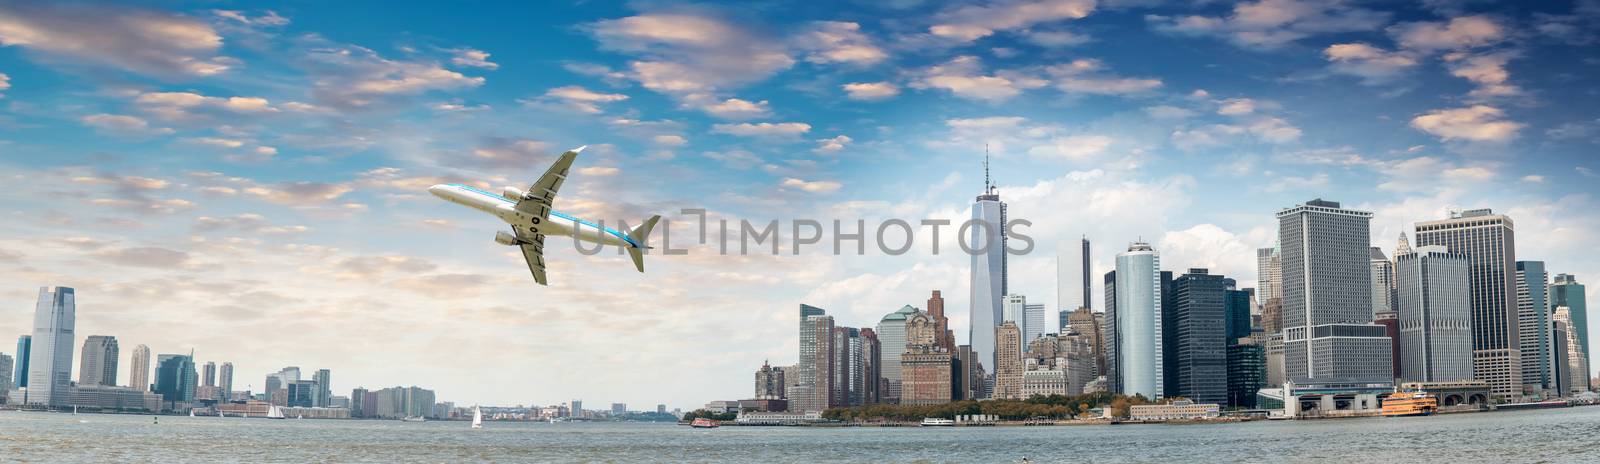 Aircraft overflying New York City skyline by jovannig